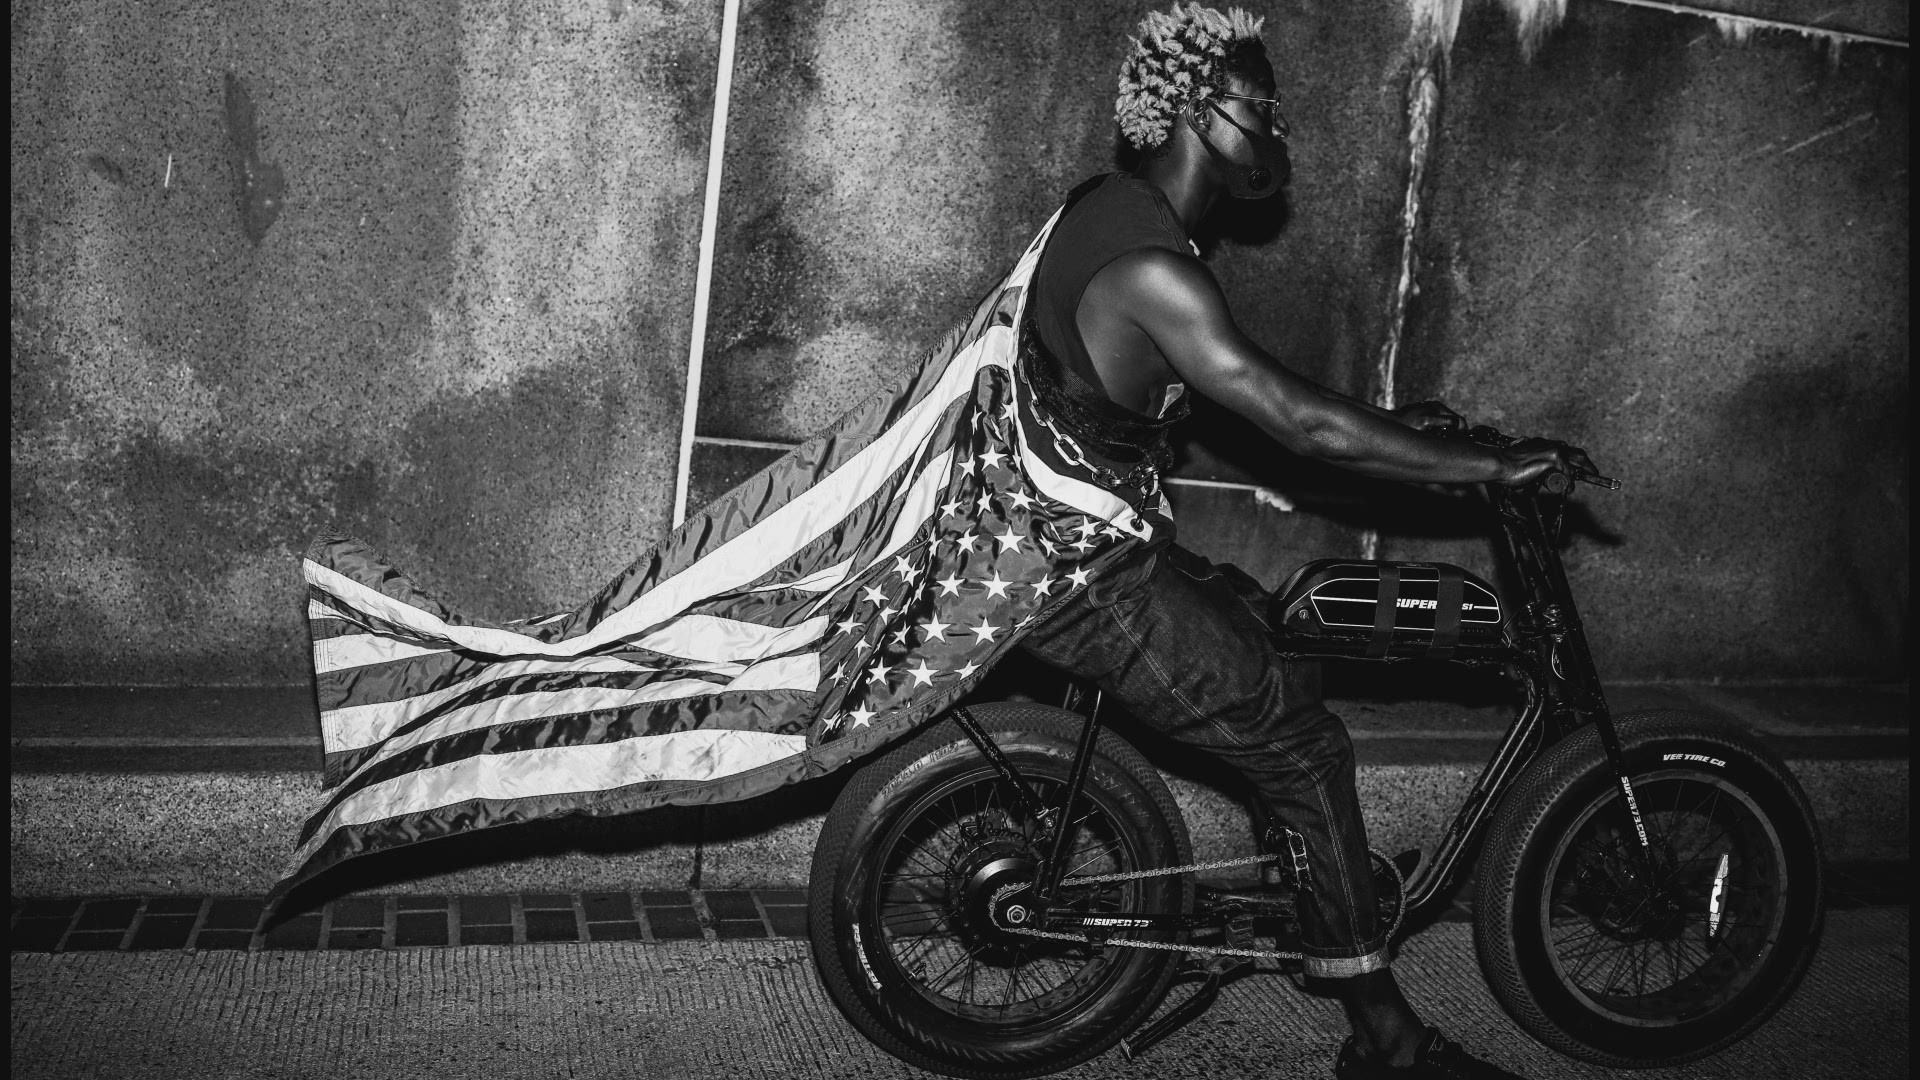 Photographer Conrado Muluc captures protesters through his lens